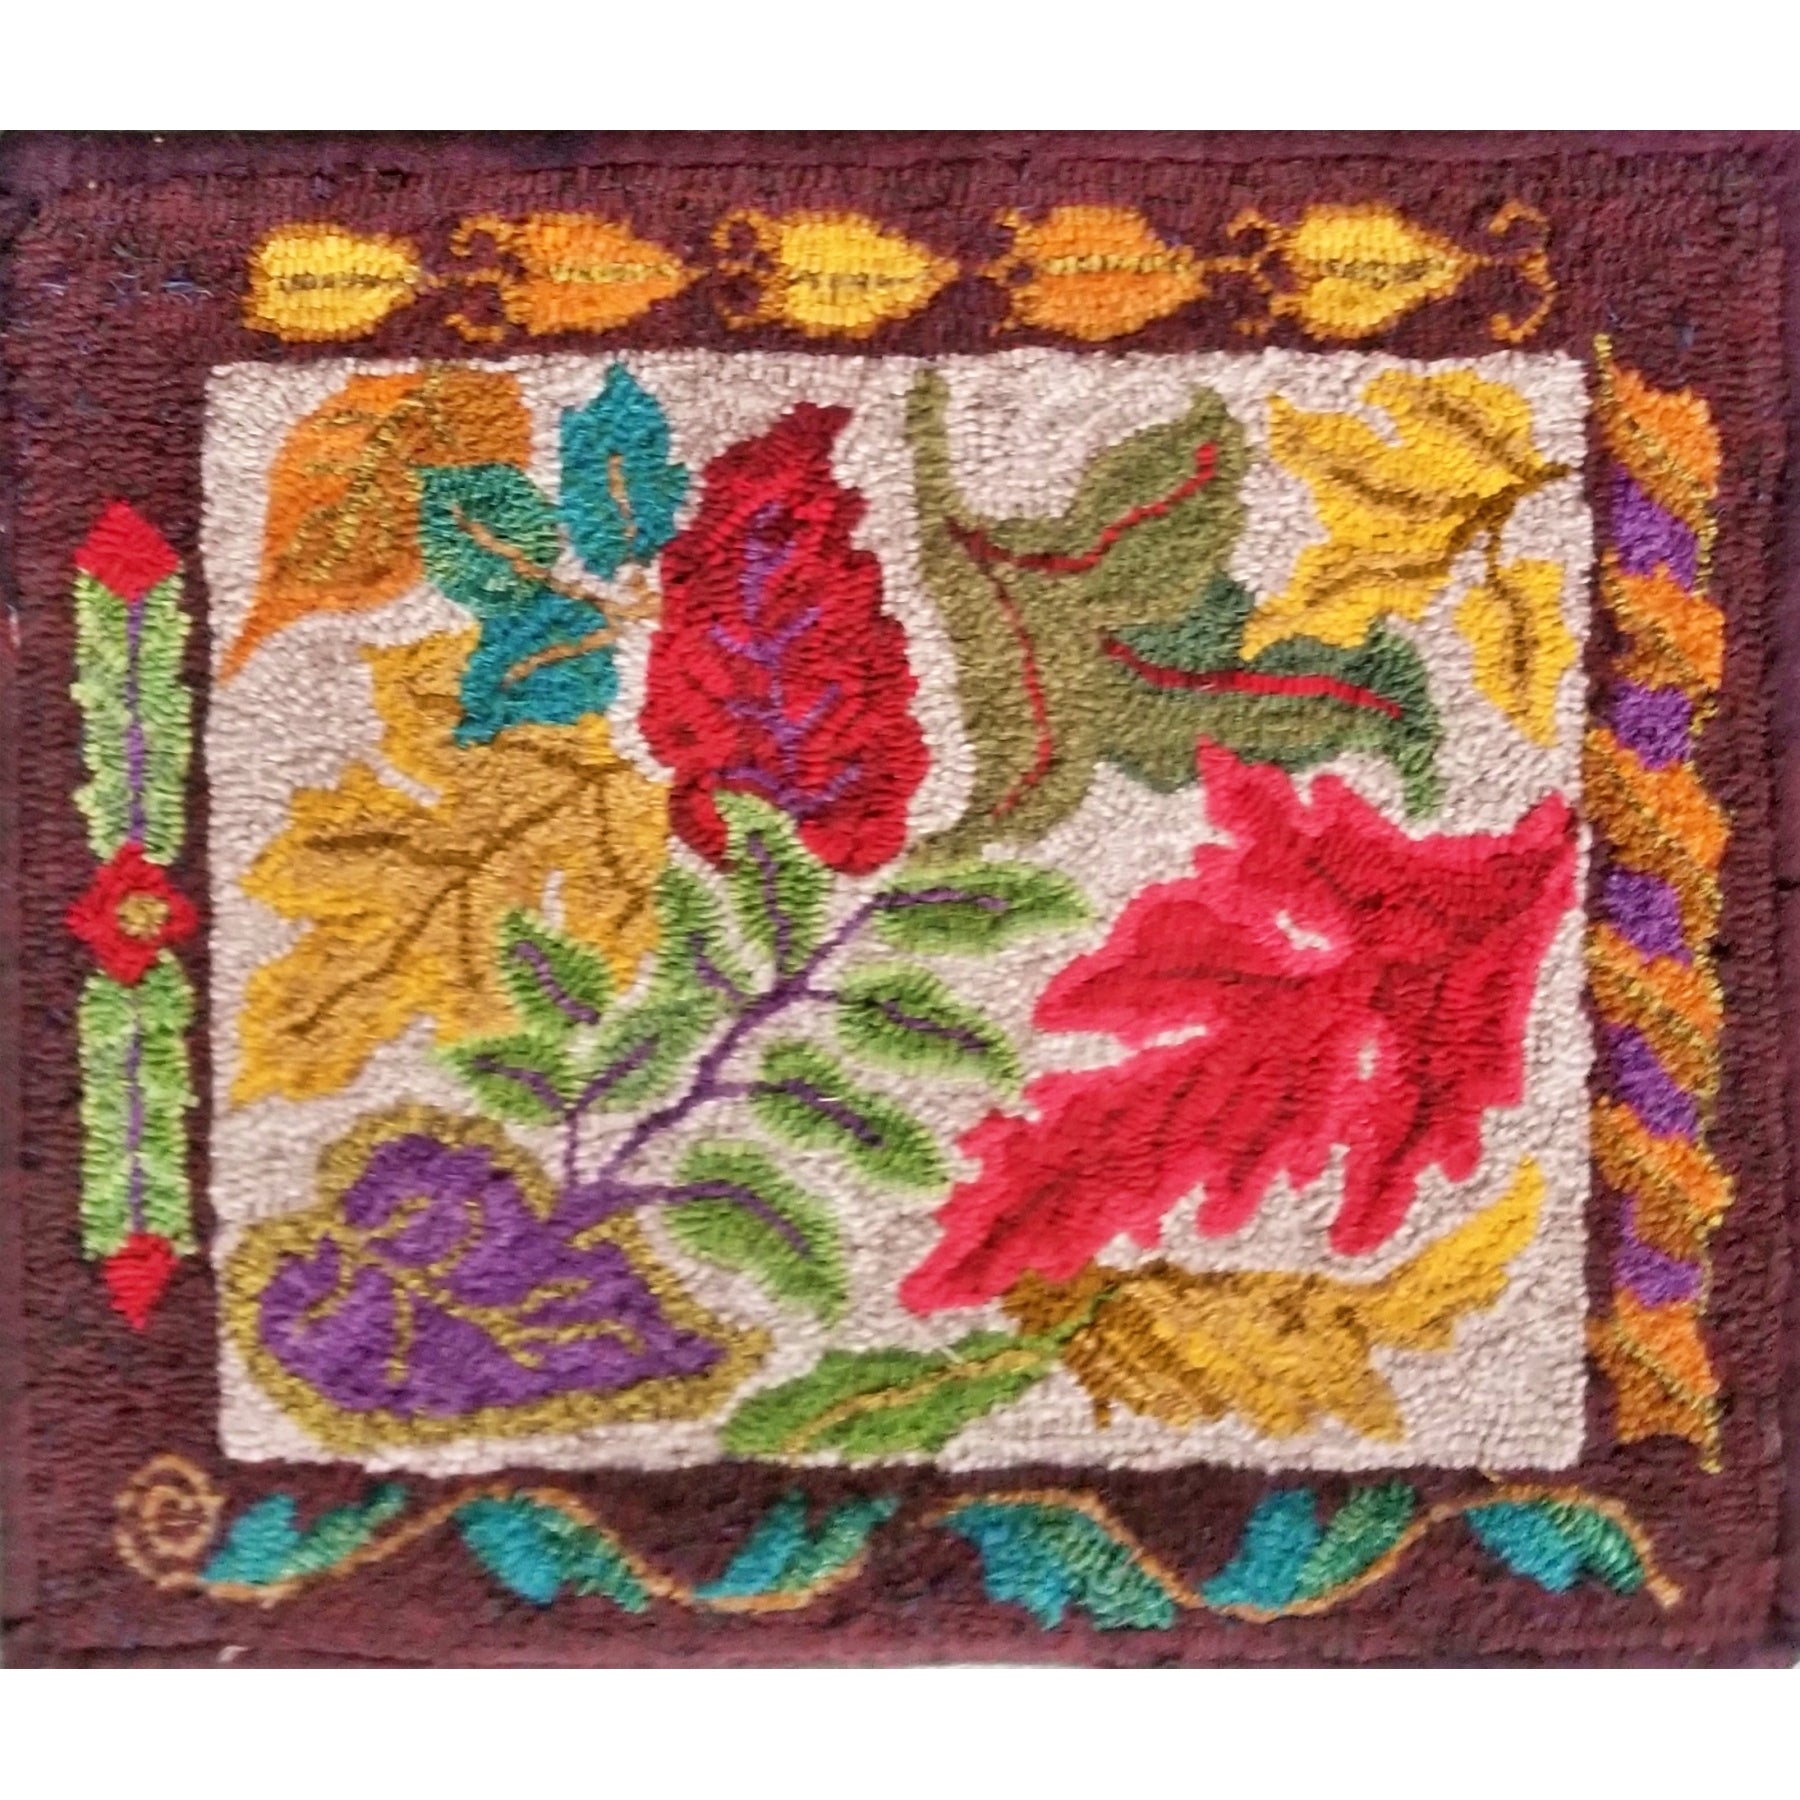 Leaves & Leaf Border, rug hooked by Sabine Maytum